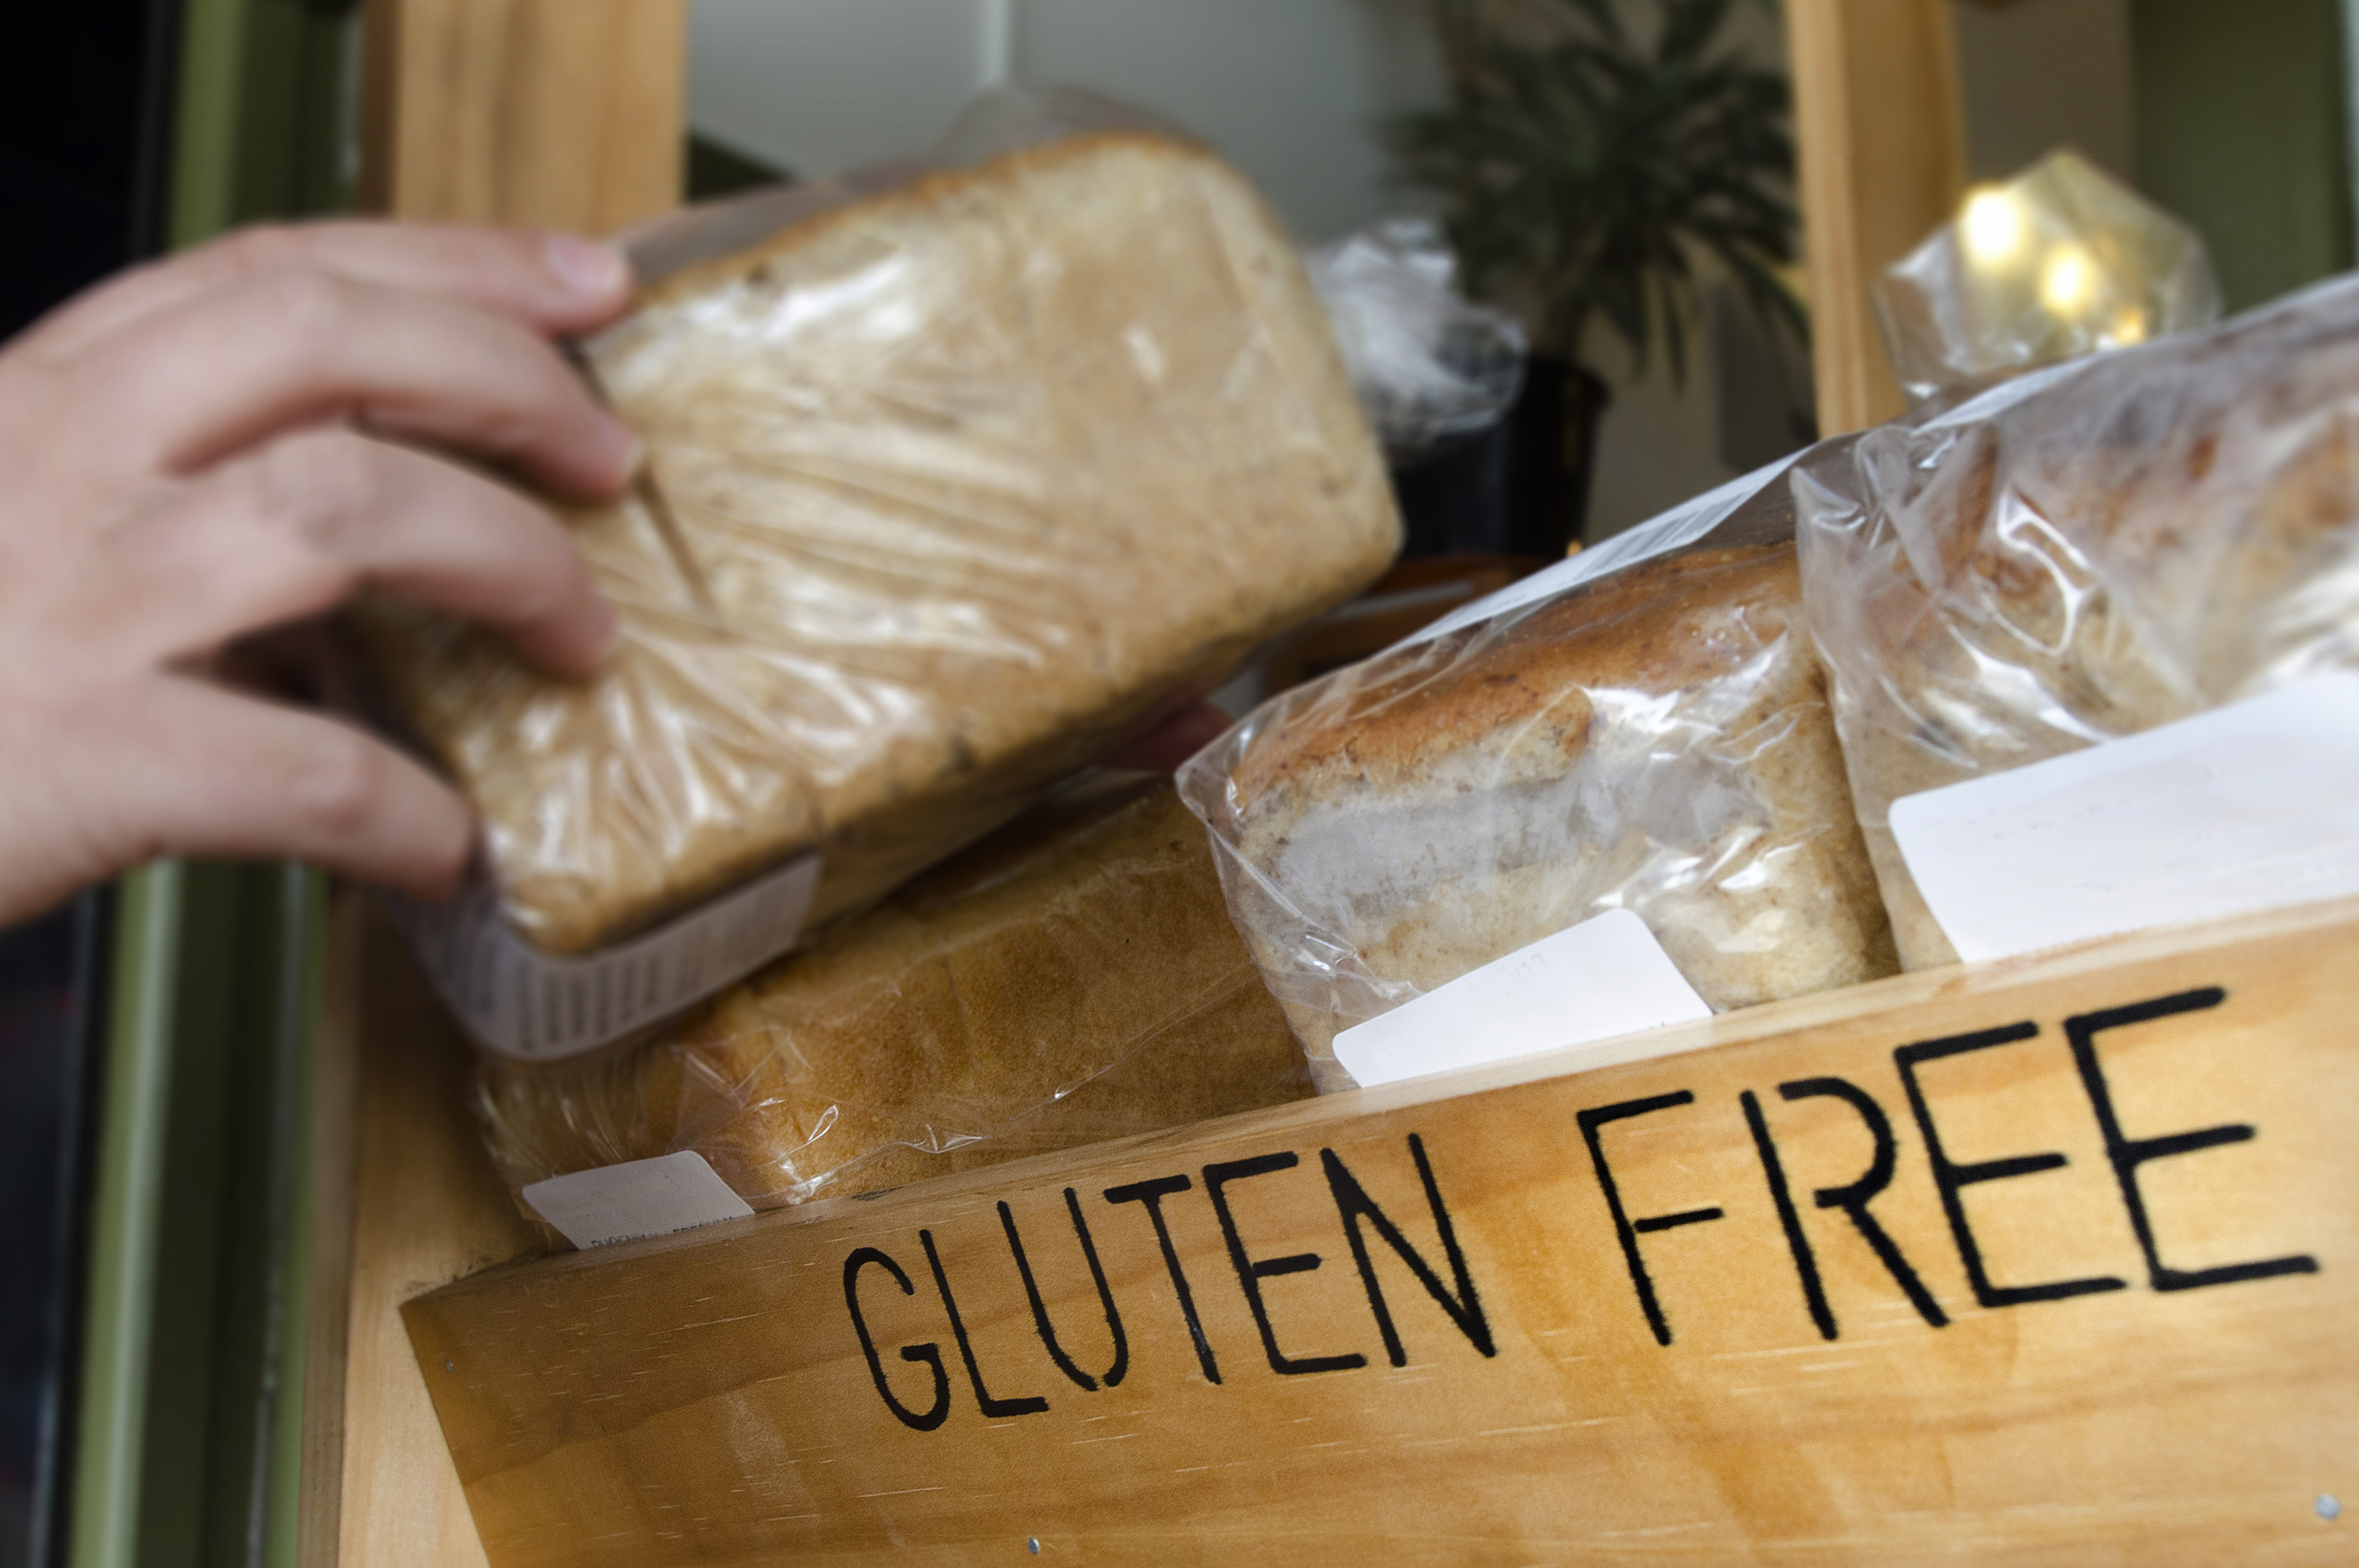 Gluten-free diet impact on comor...